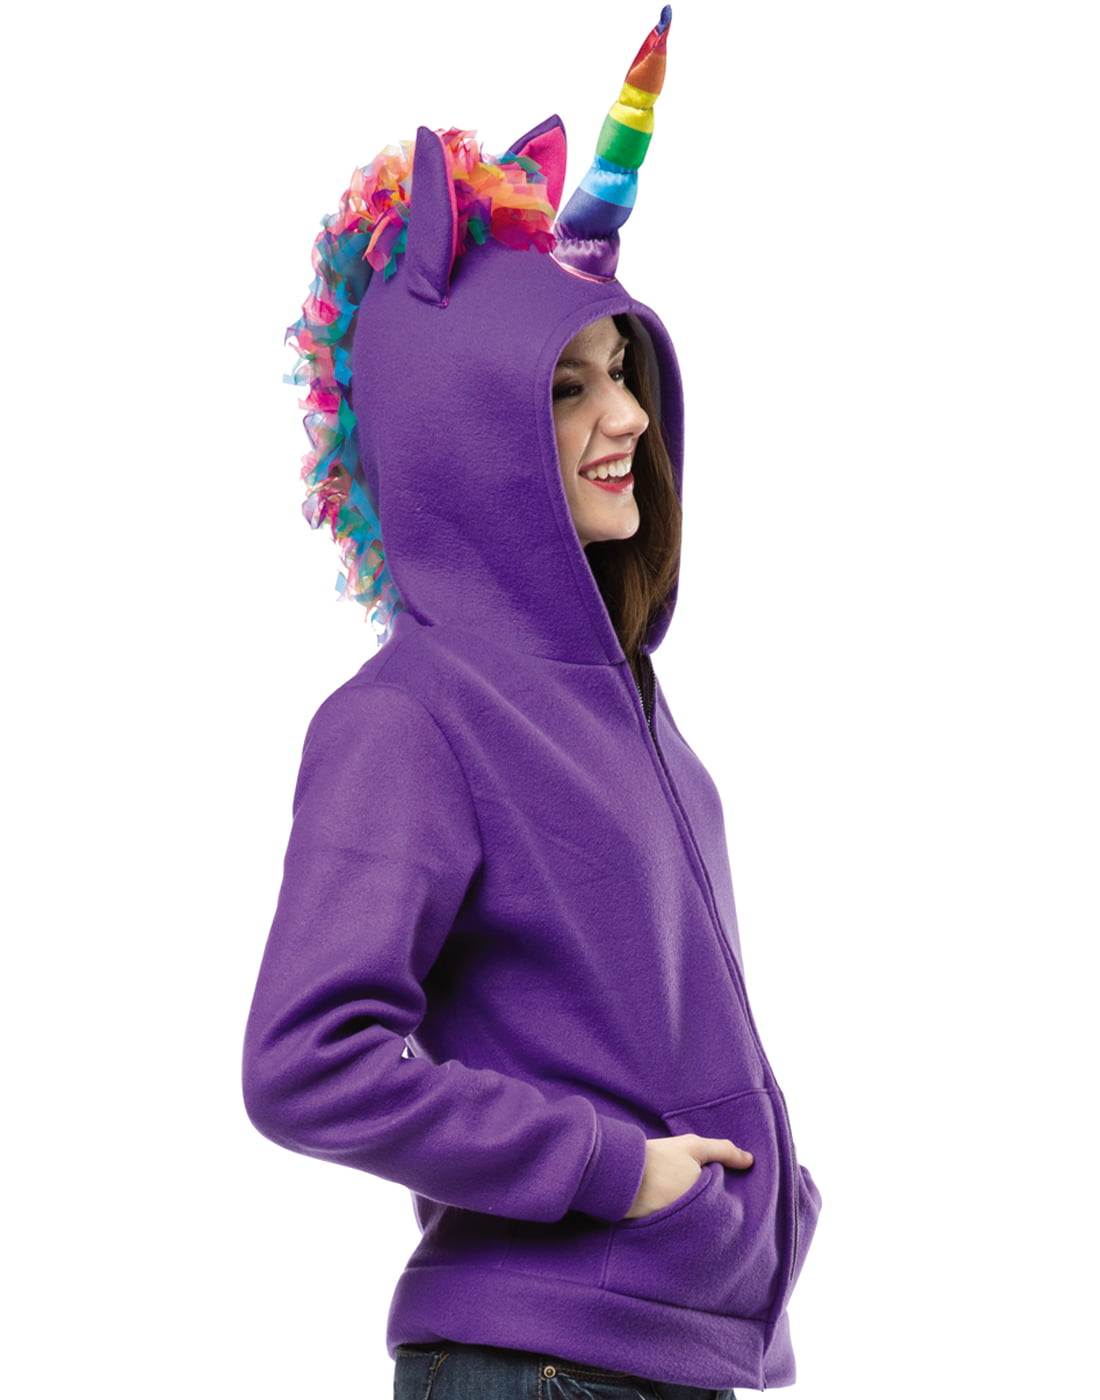 Buy > unicorn hoodie for women > in stock